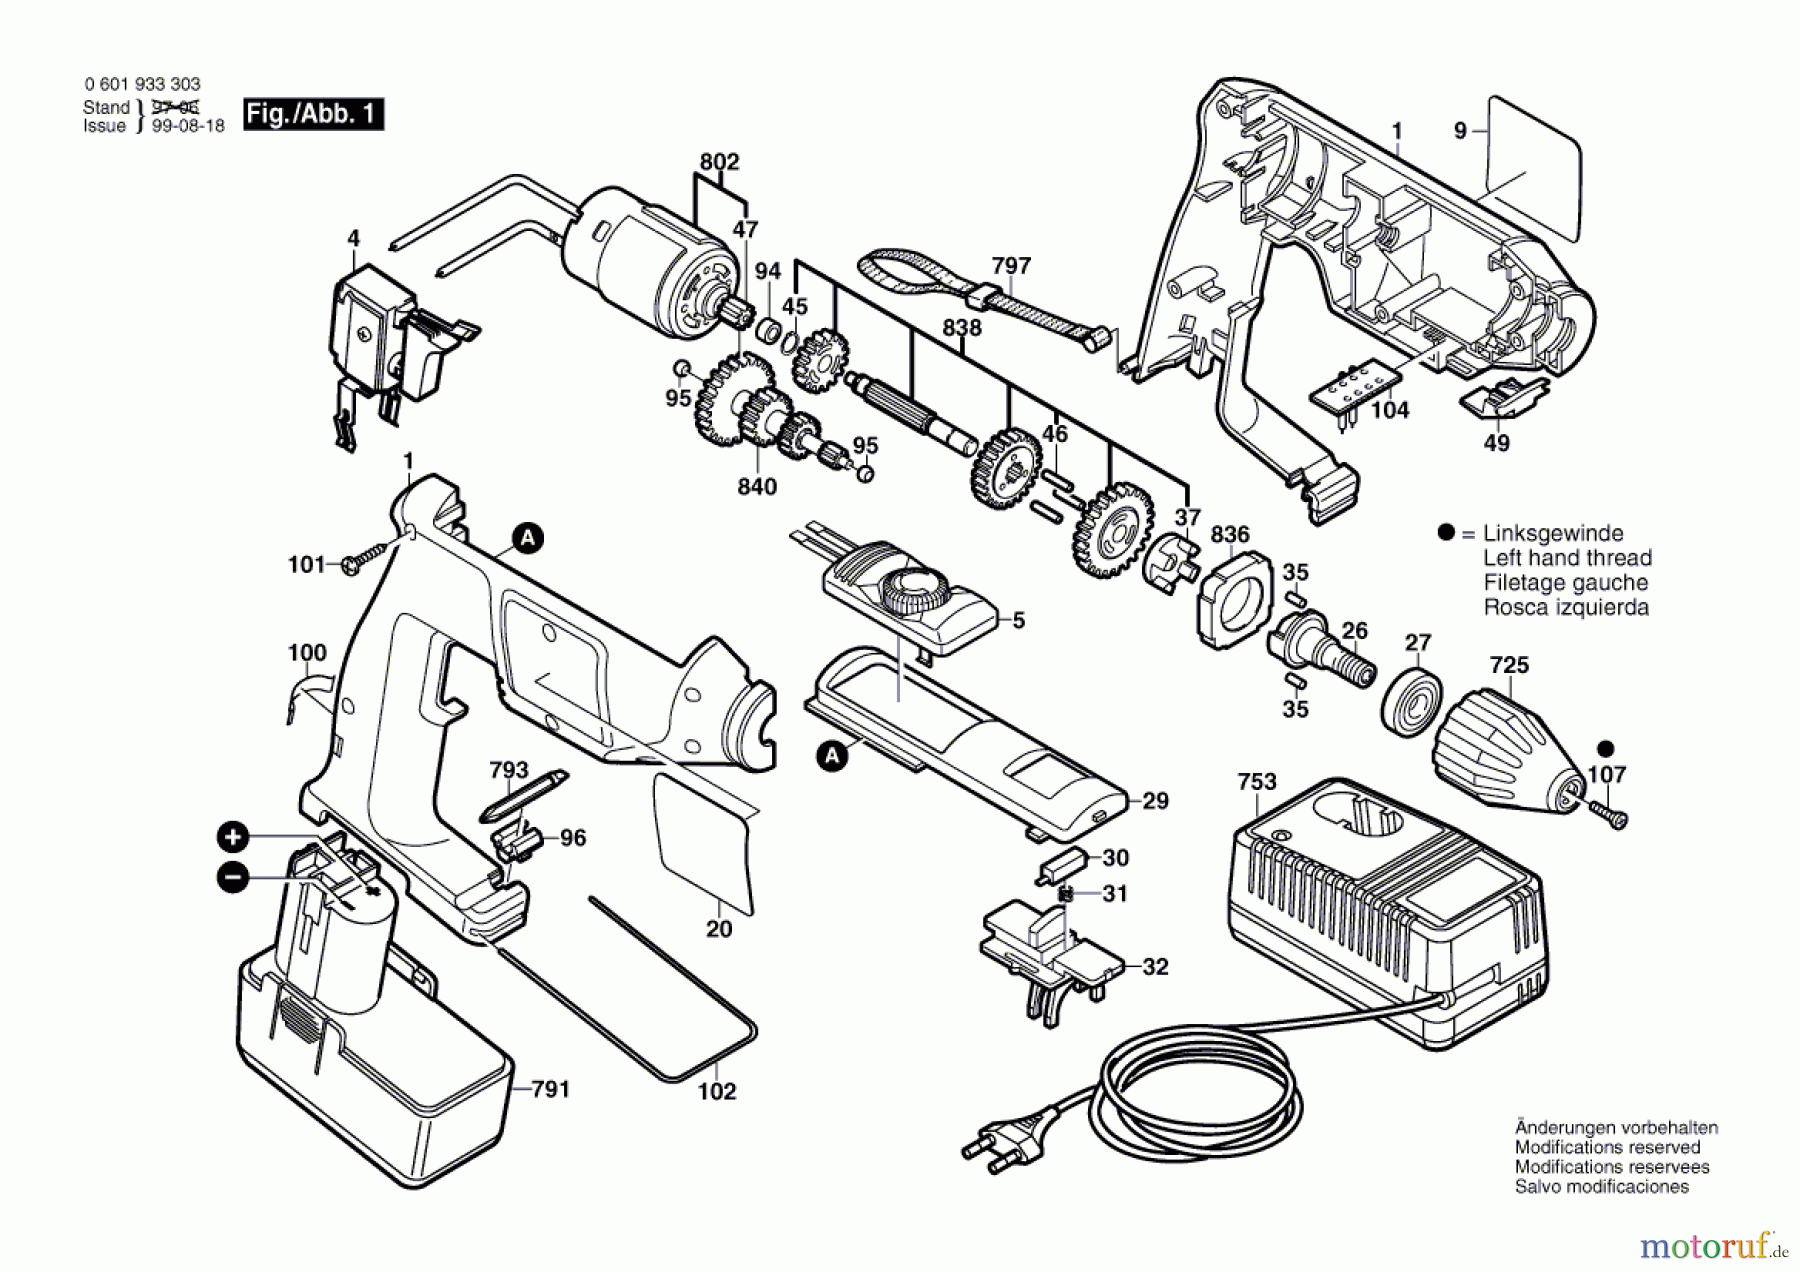  Bosch Akku Werkzeug Akku-Bohrmaschine GBM 9,6 VSP-2 Seite 1